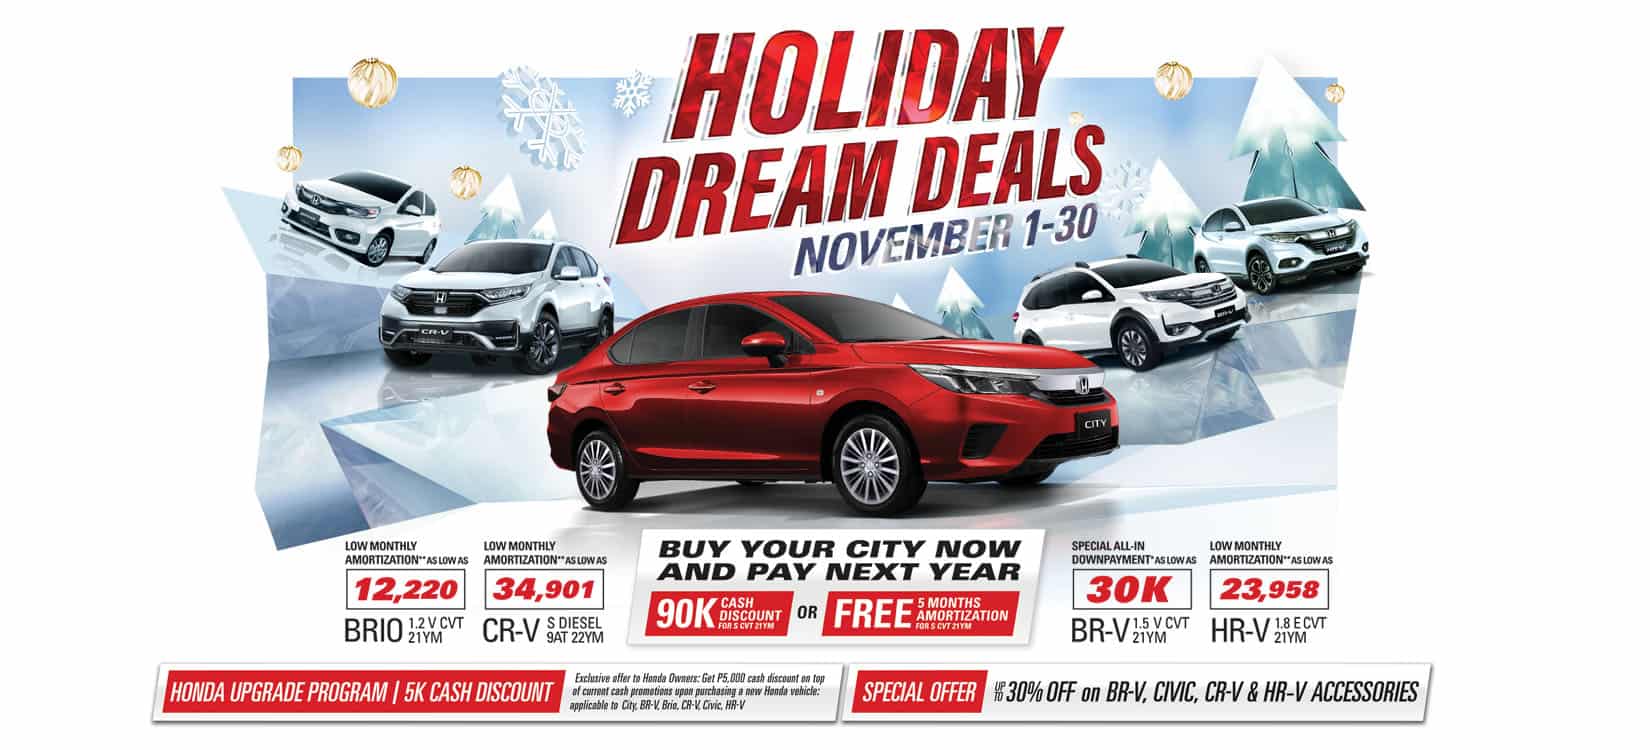 Celebrate the holiday season with Hondaâ€™s â€œHoliday Dream Dealsâ€